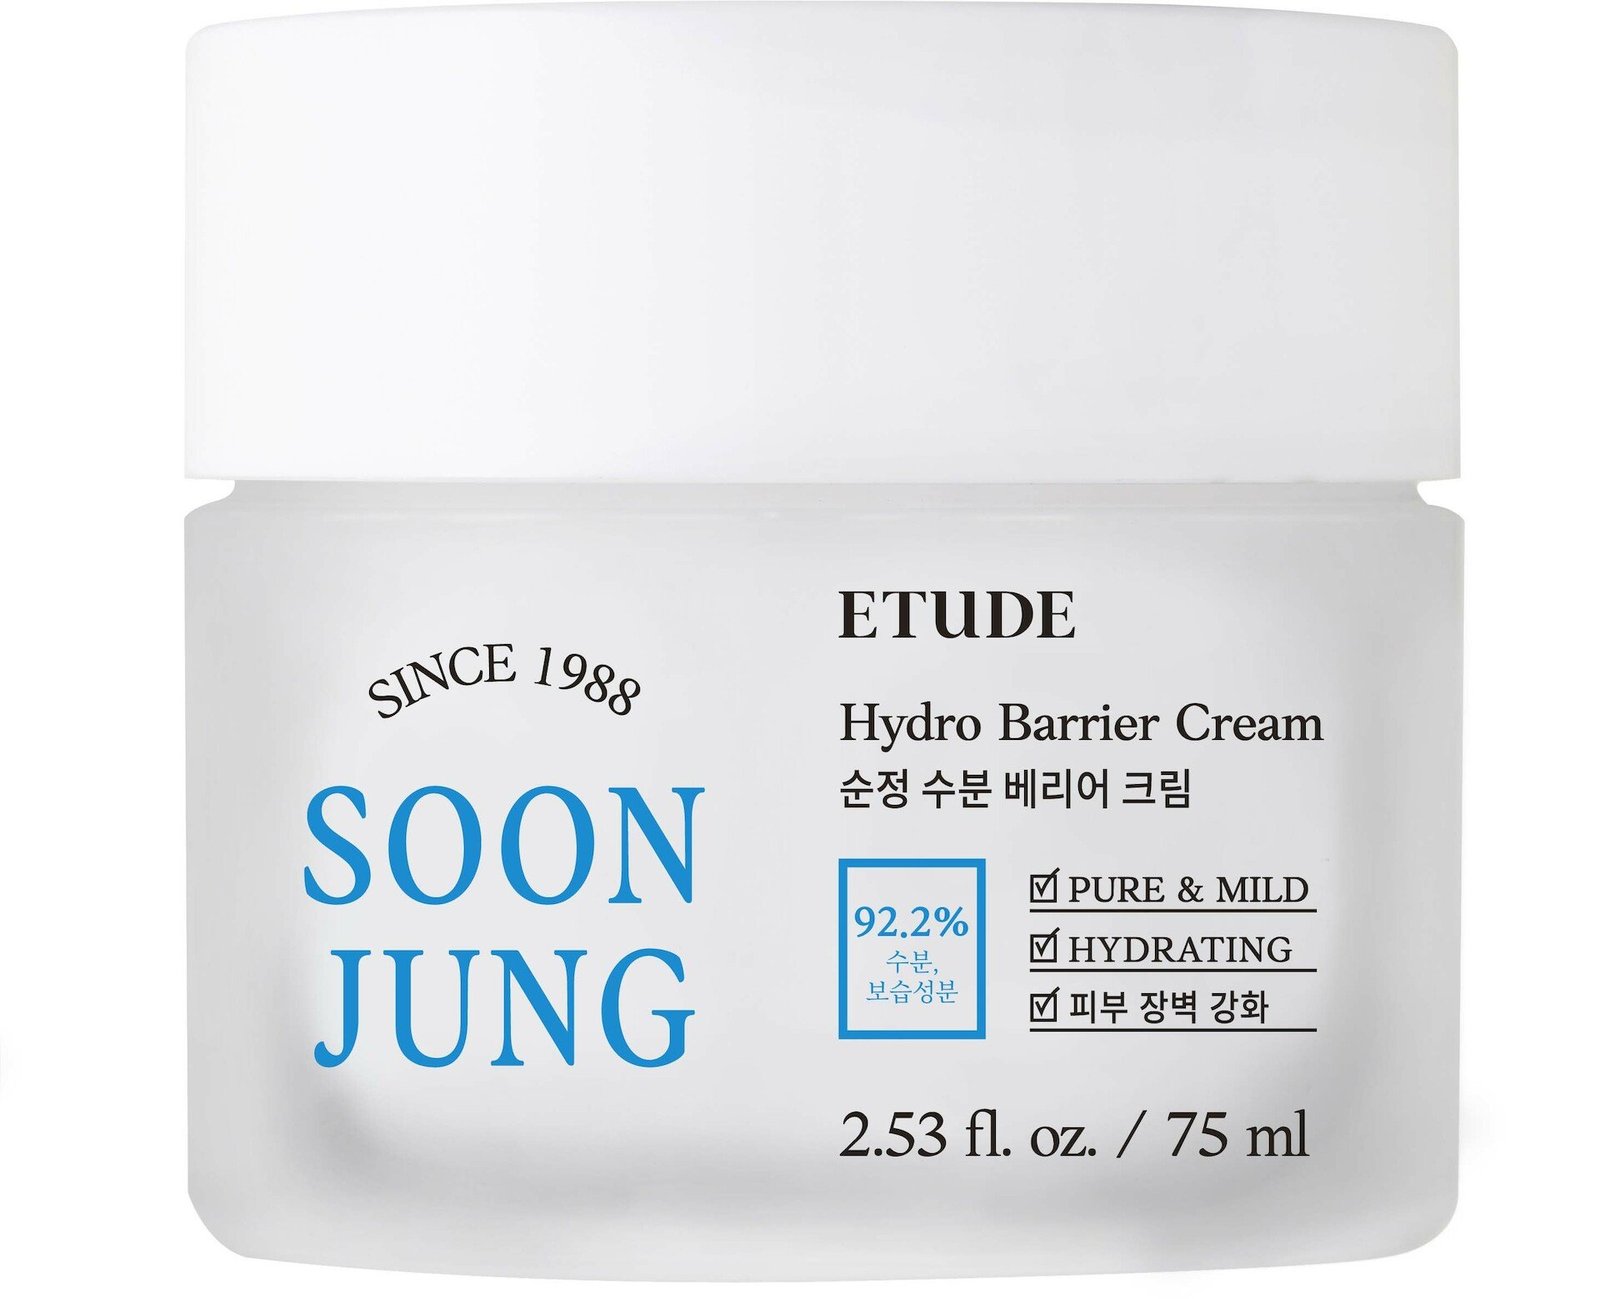 Etude Soon Jung Hydro Barrier Cream 75ml